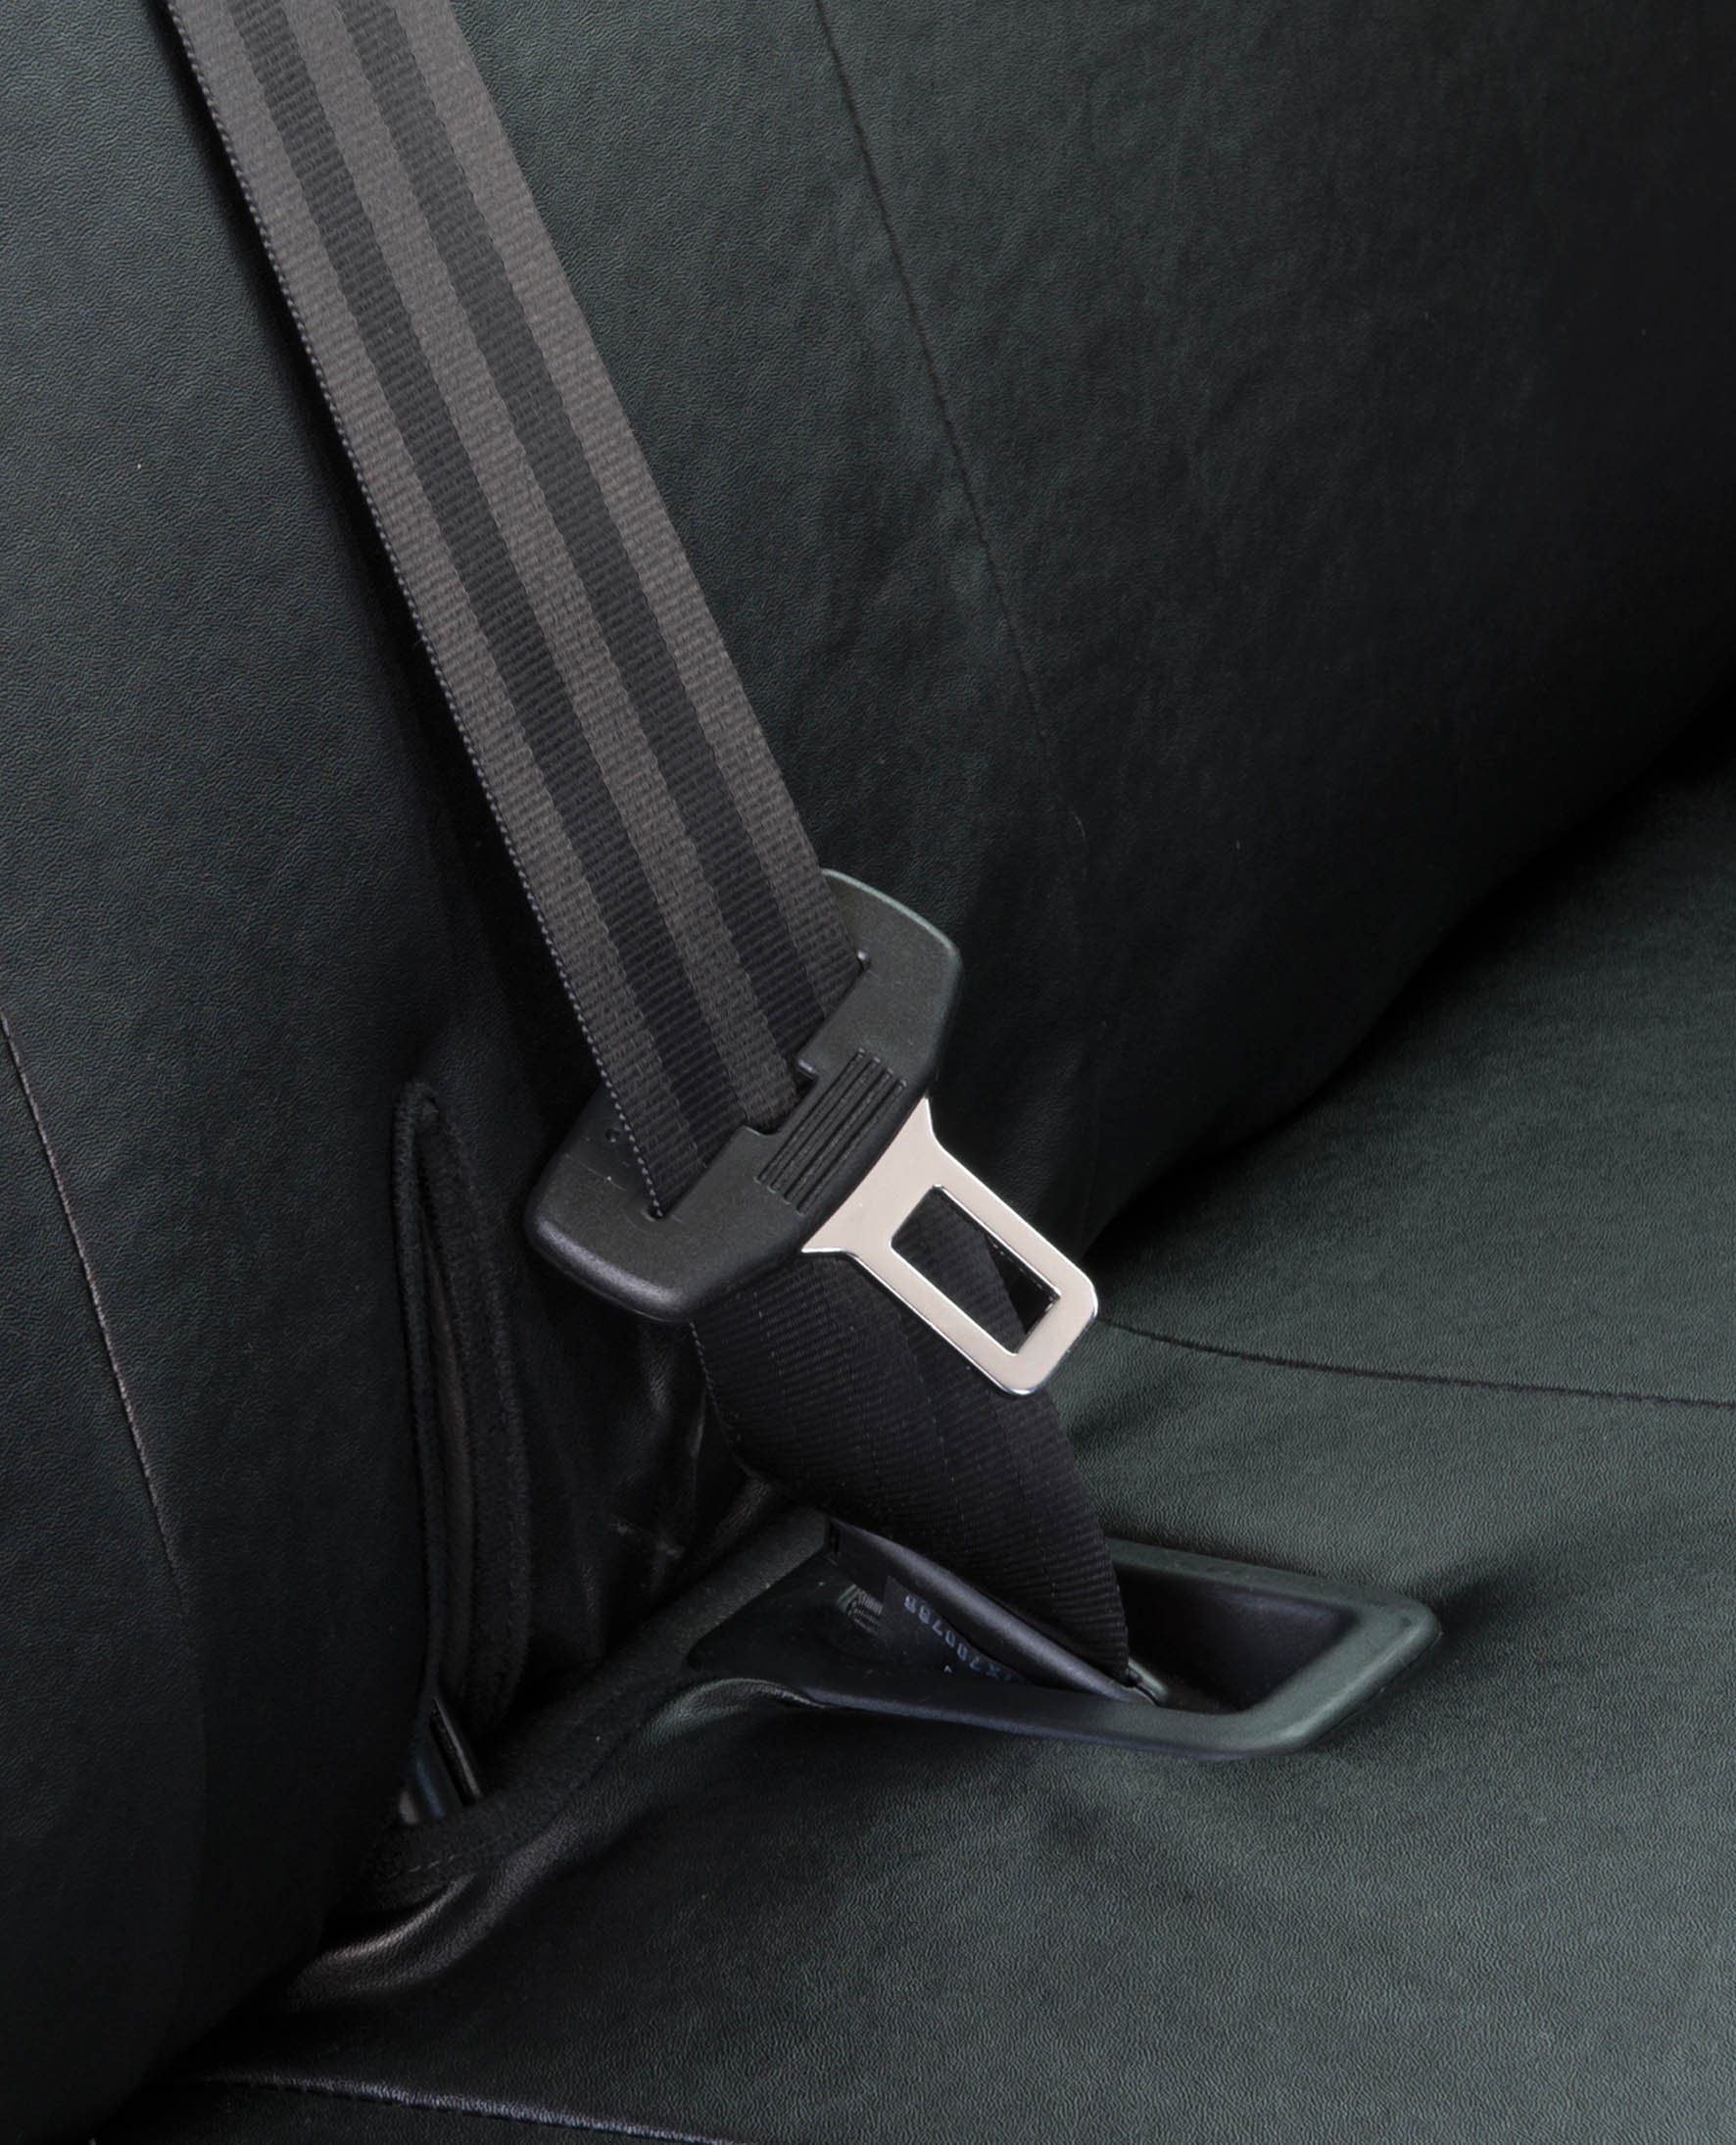 Passform Sitzbezug aus Kunstleder für VW T5, Doppelbankbezug hinten